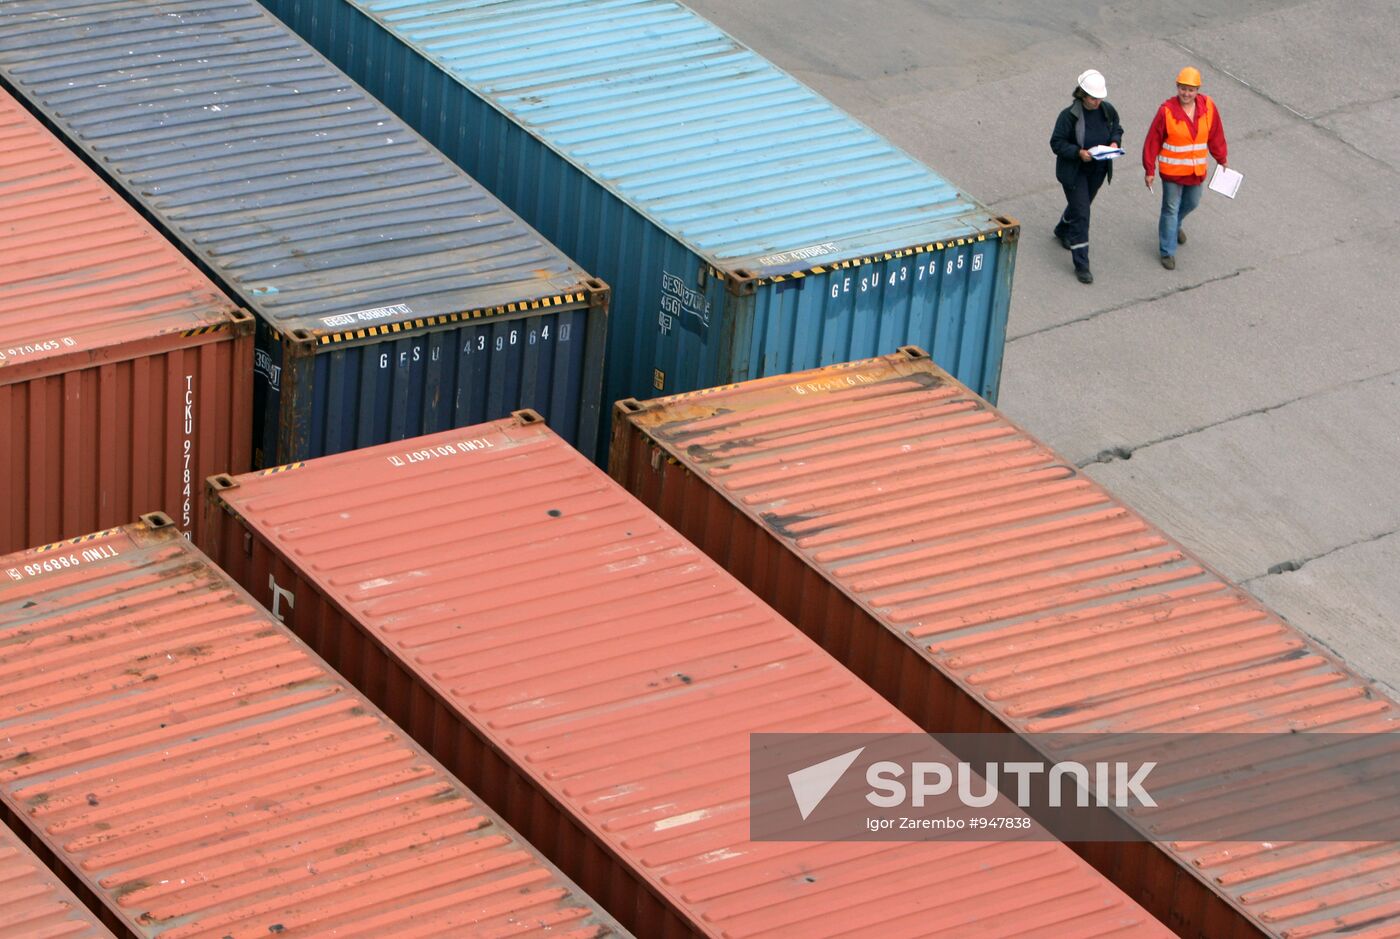 Container terminal at Kaliningrad Port